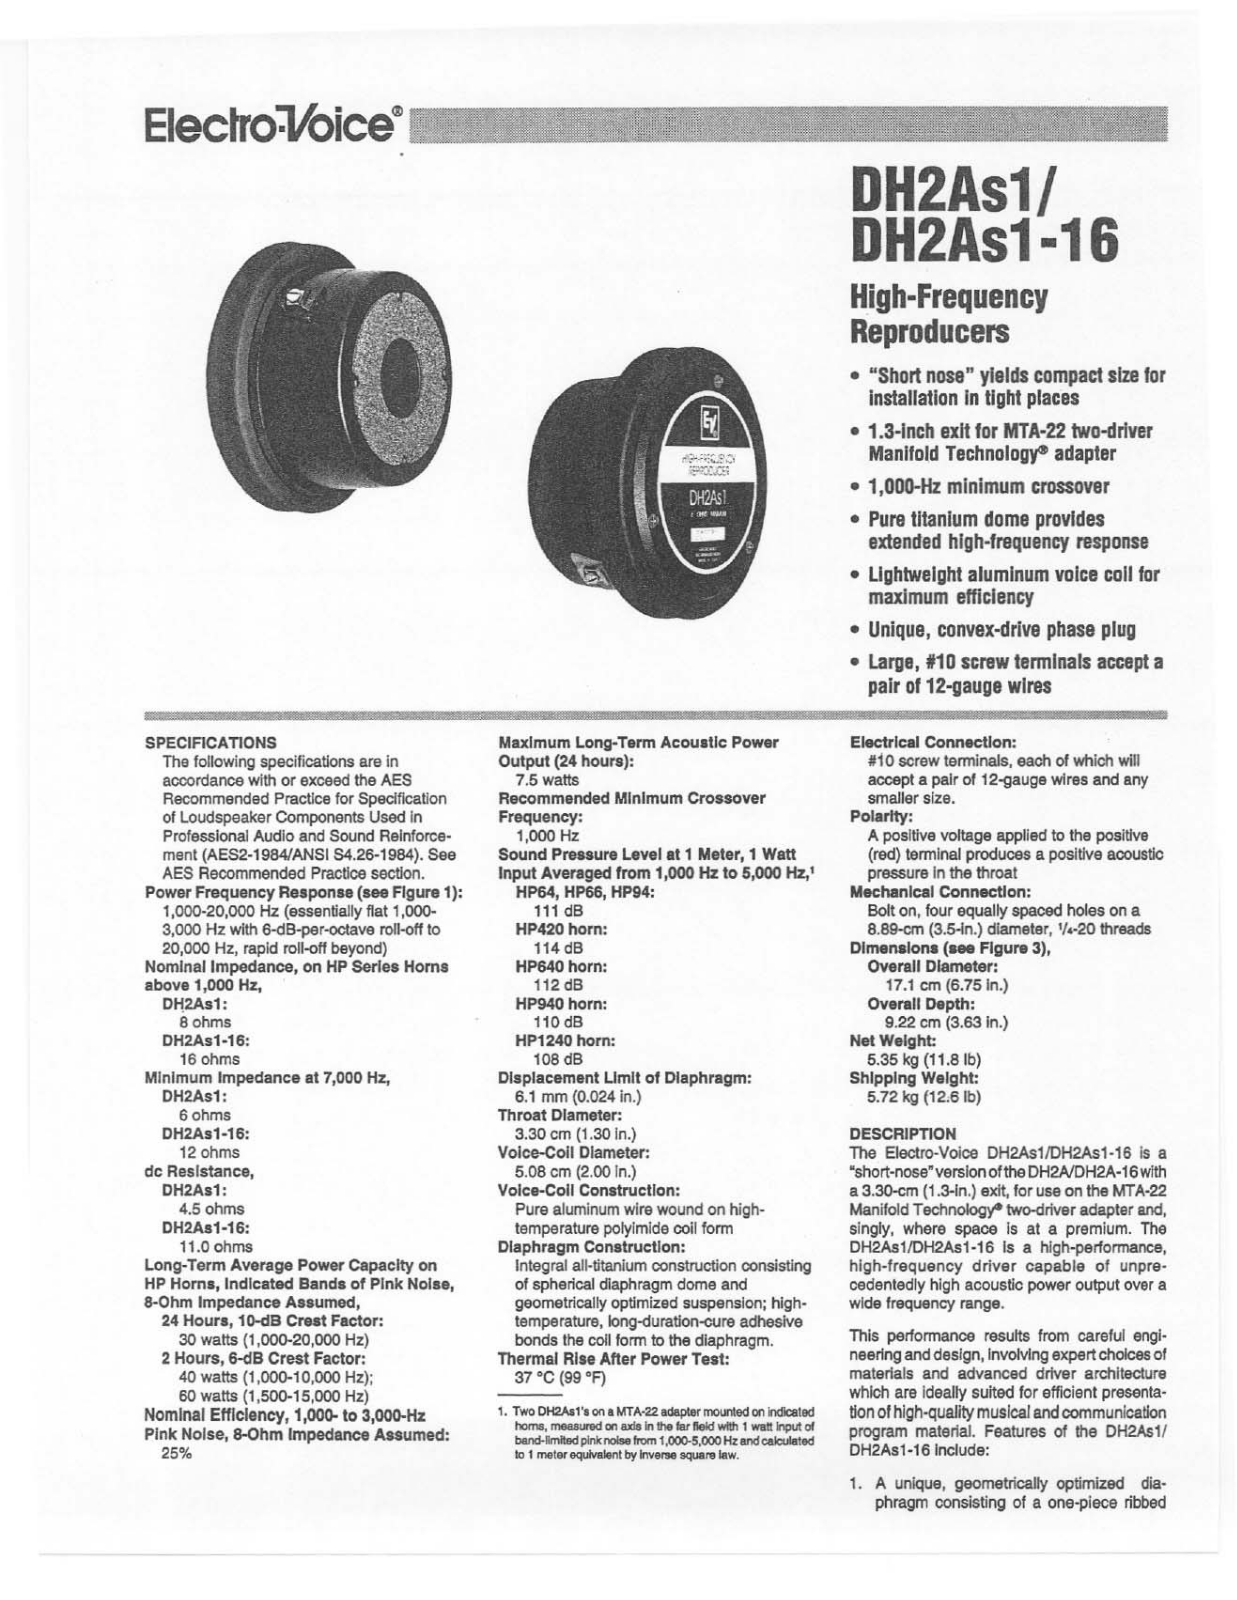 Electro-voice DH2AS1, DH2AS1-16 Manual